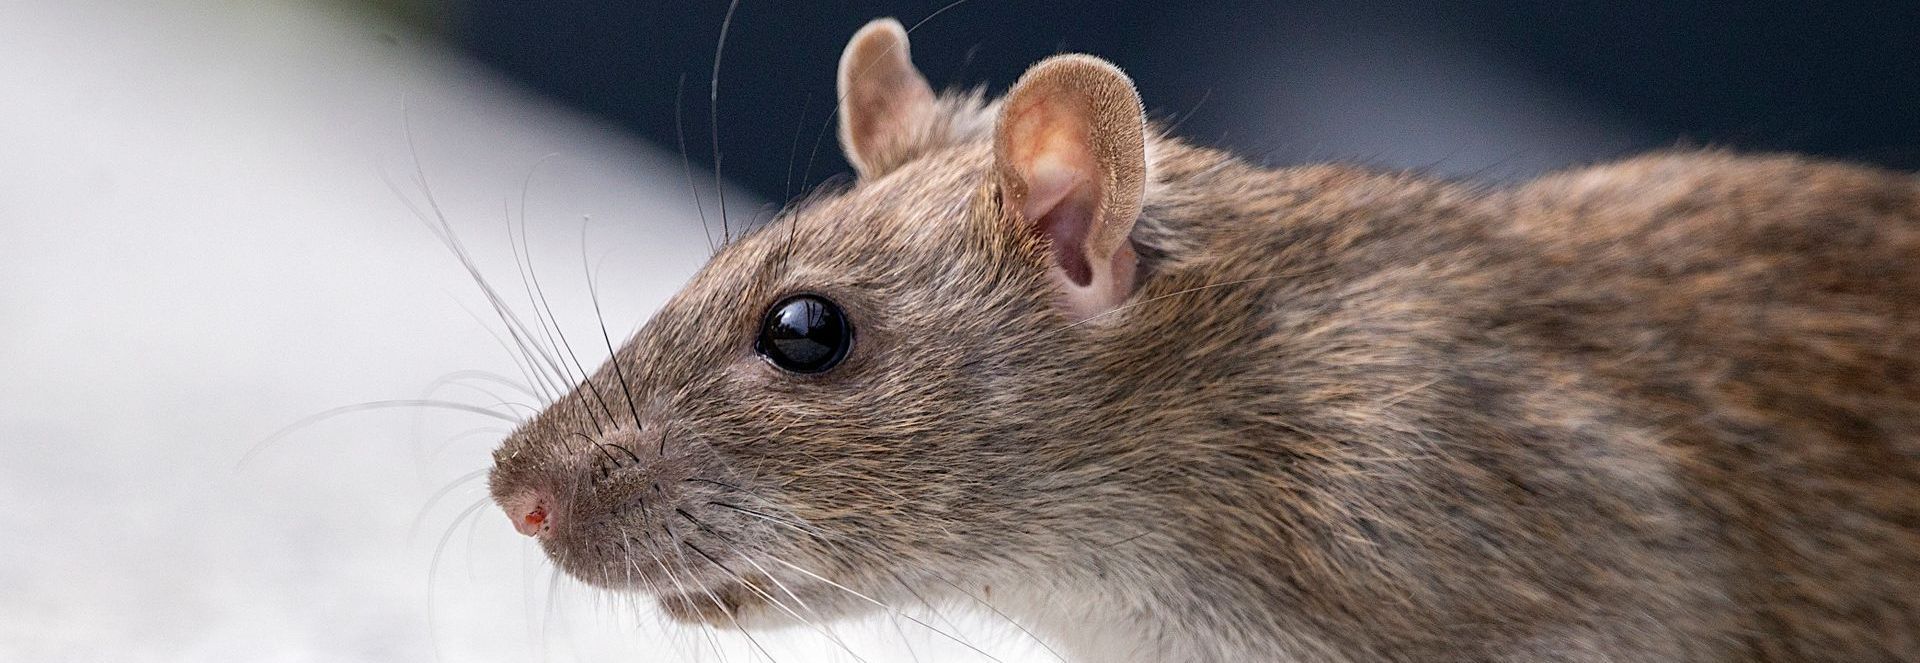 A close up of a rat looking at the camera.